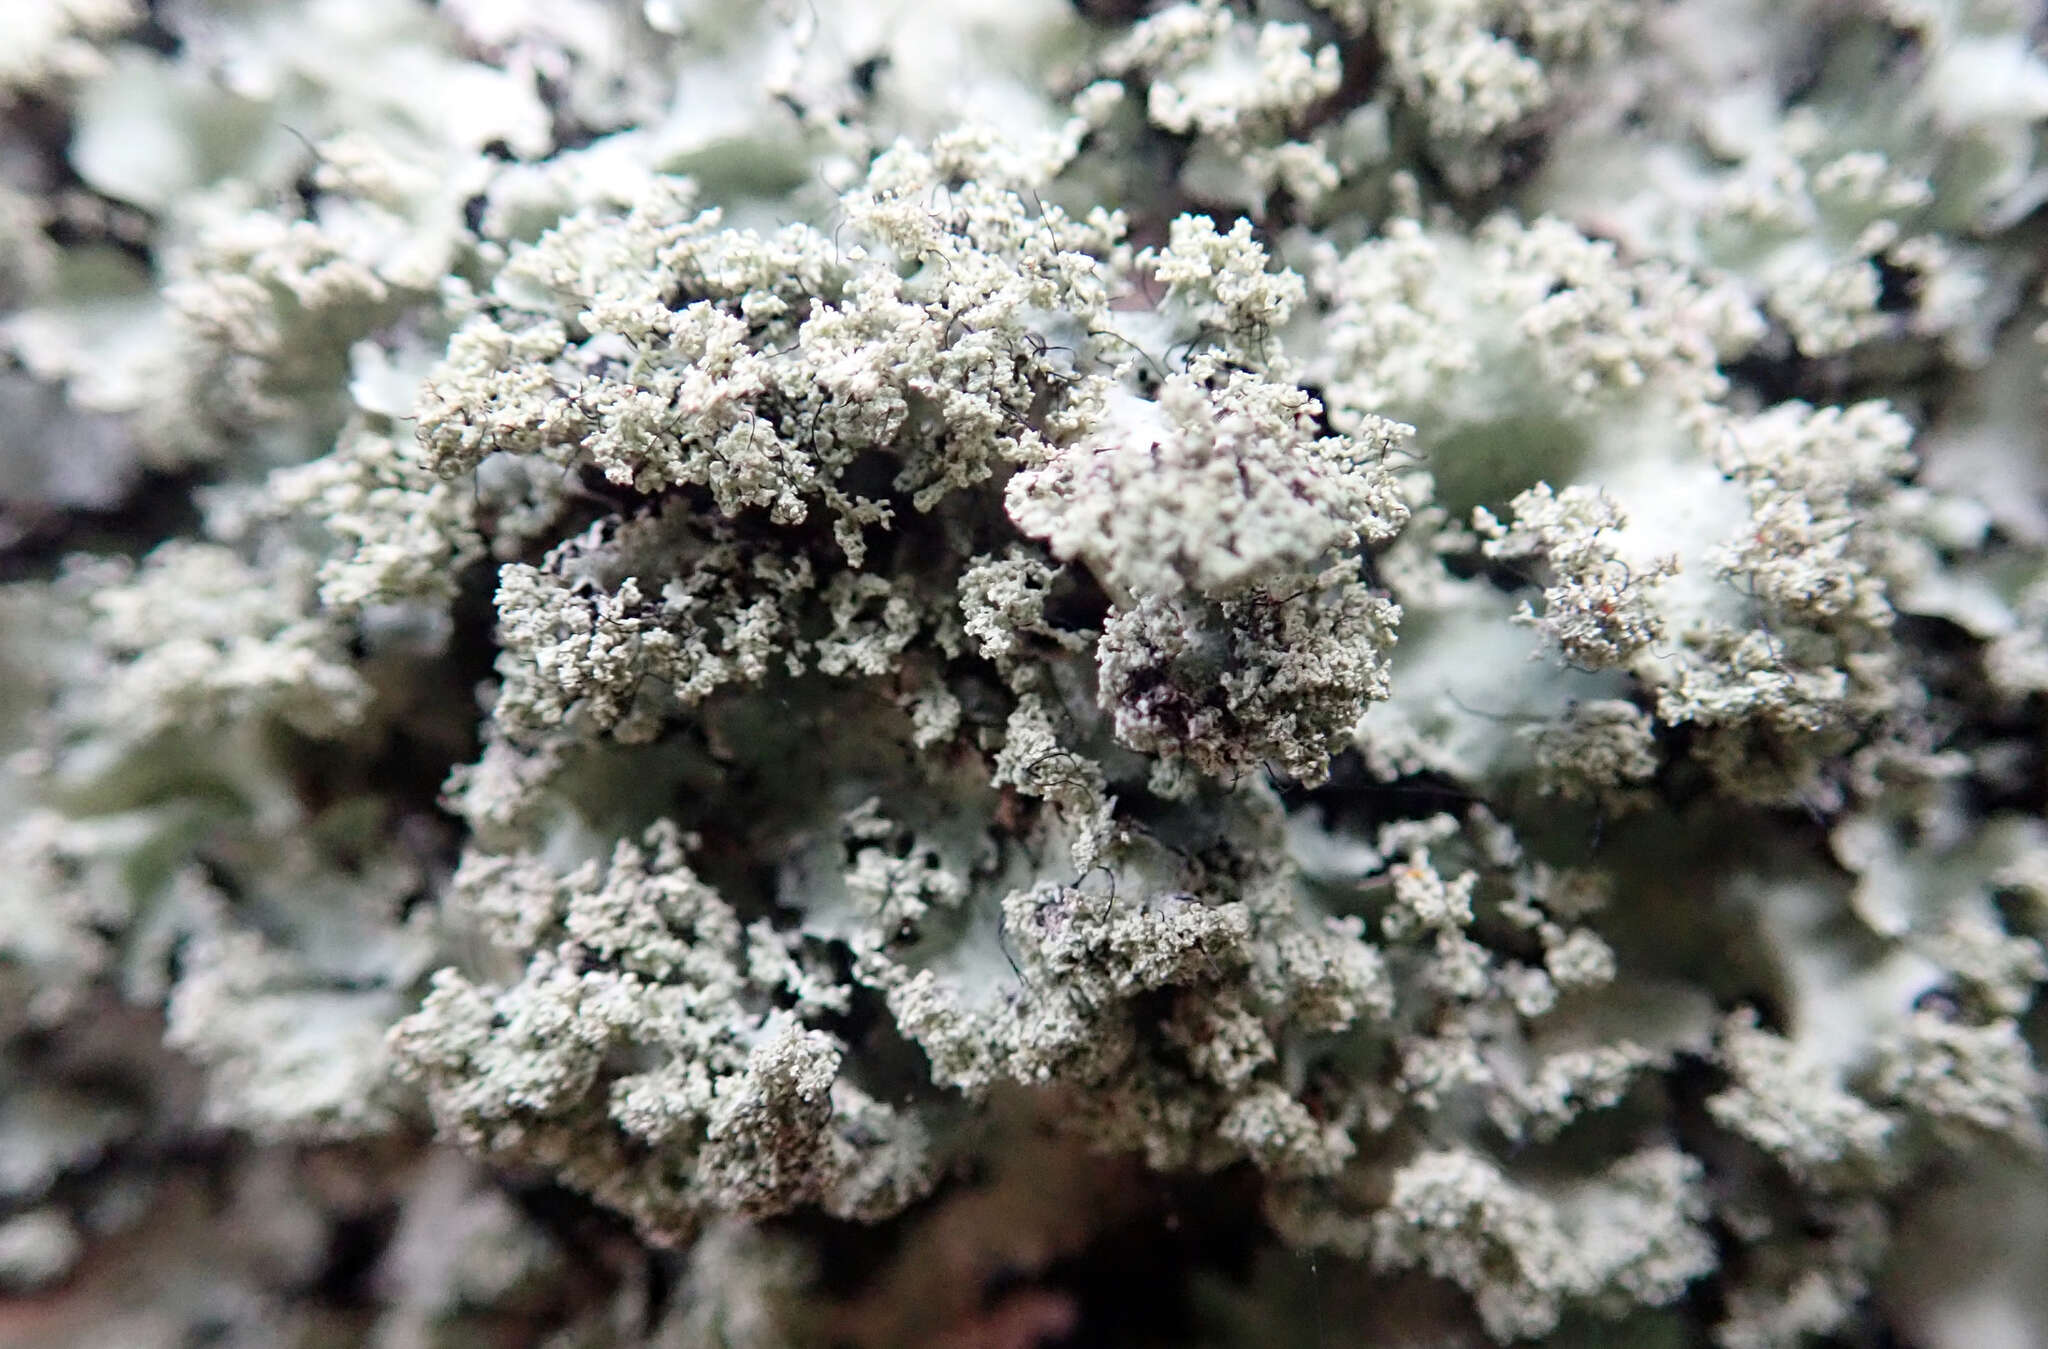 Image of Melliss' parmotrema lichen